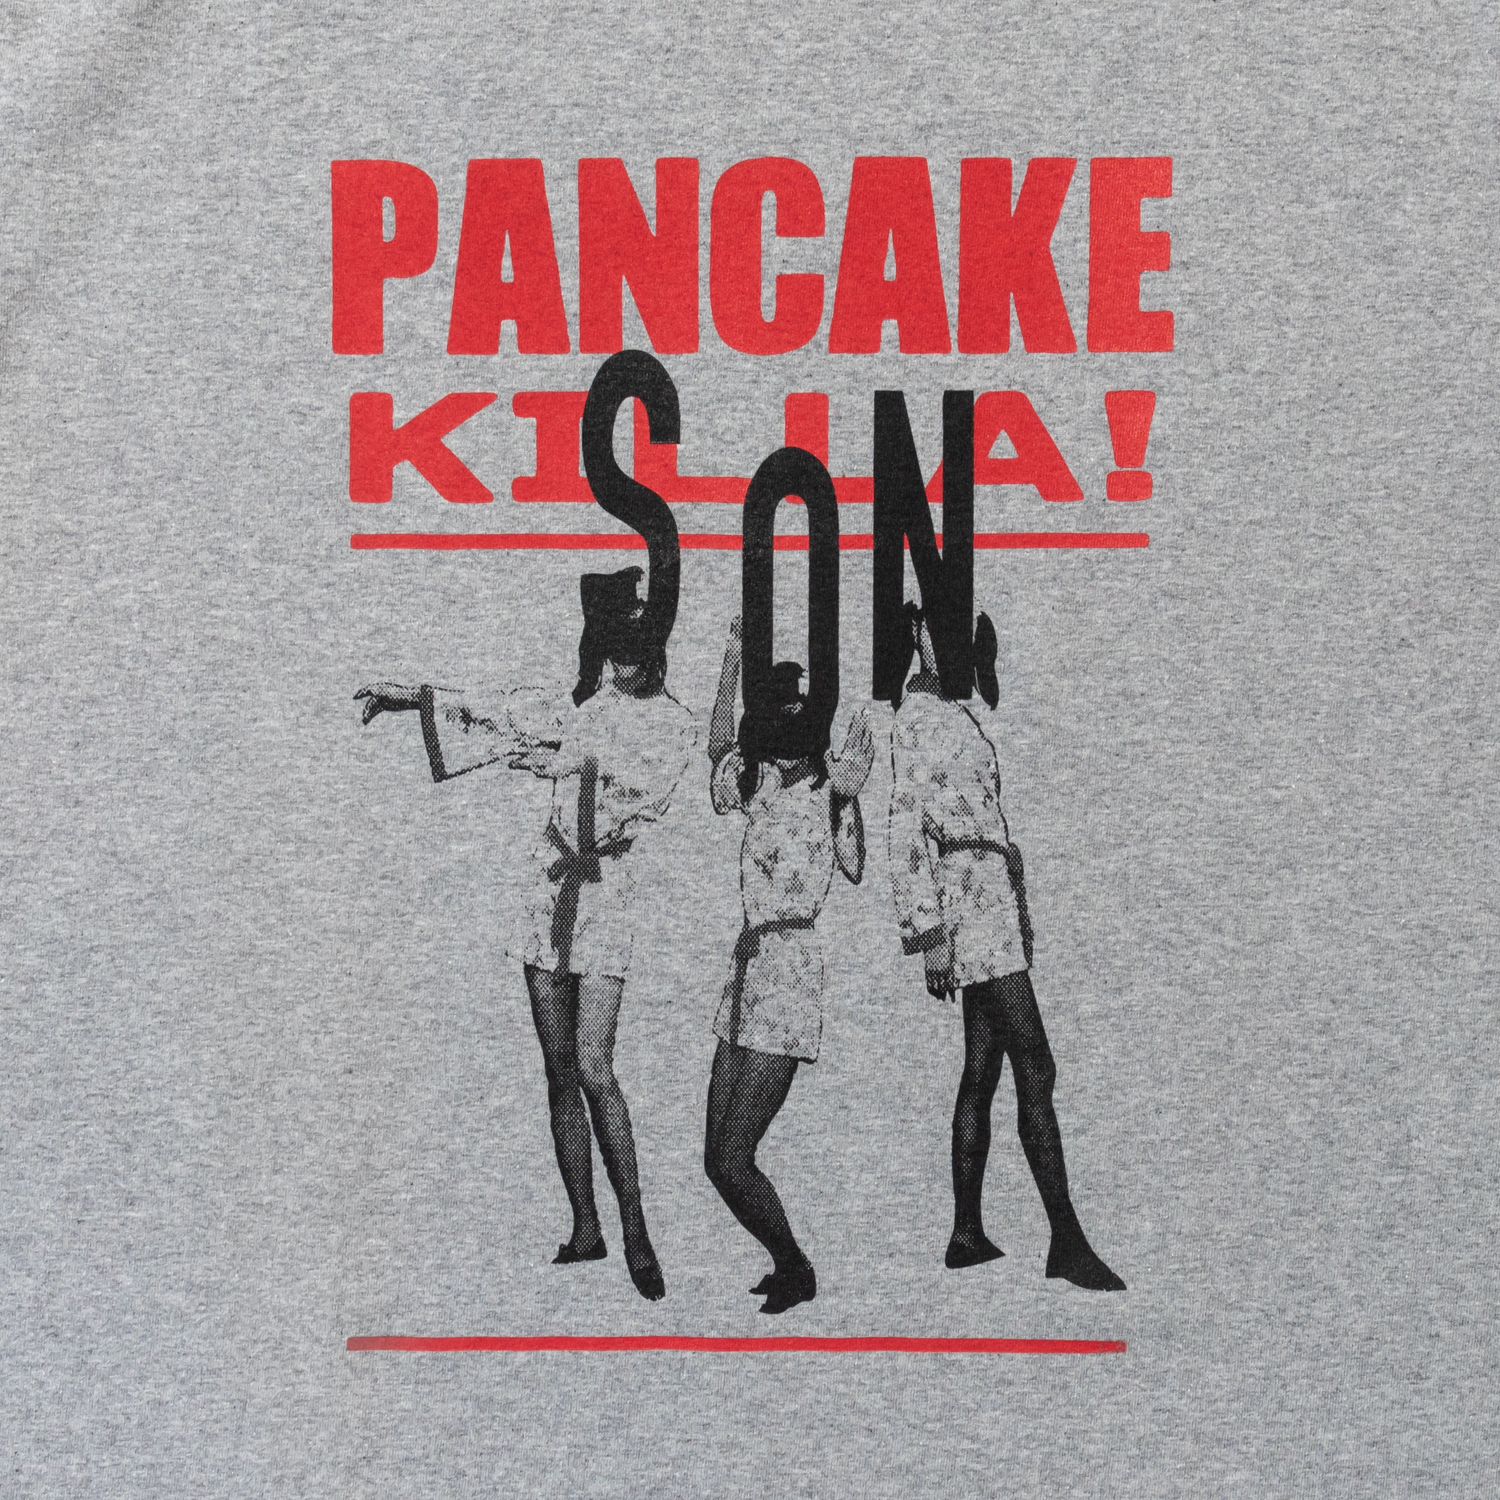 Pancake Killa / son LS designed by Ryohei kazumi